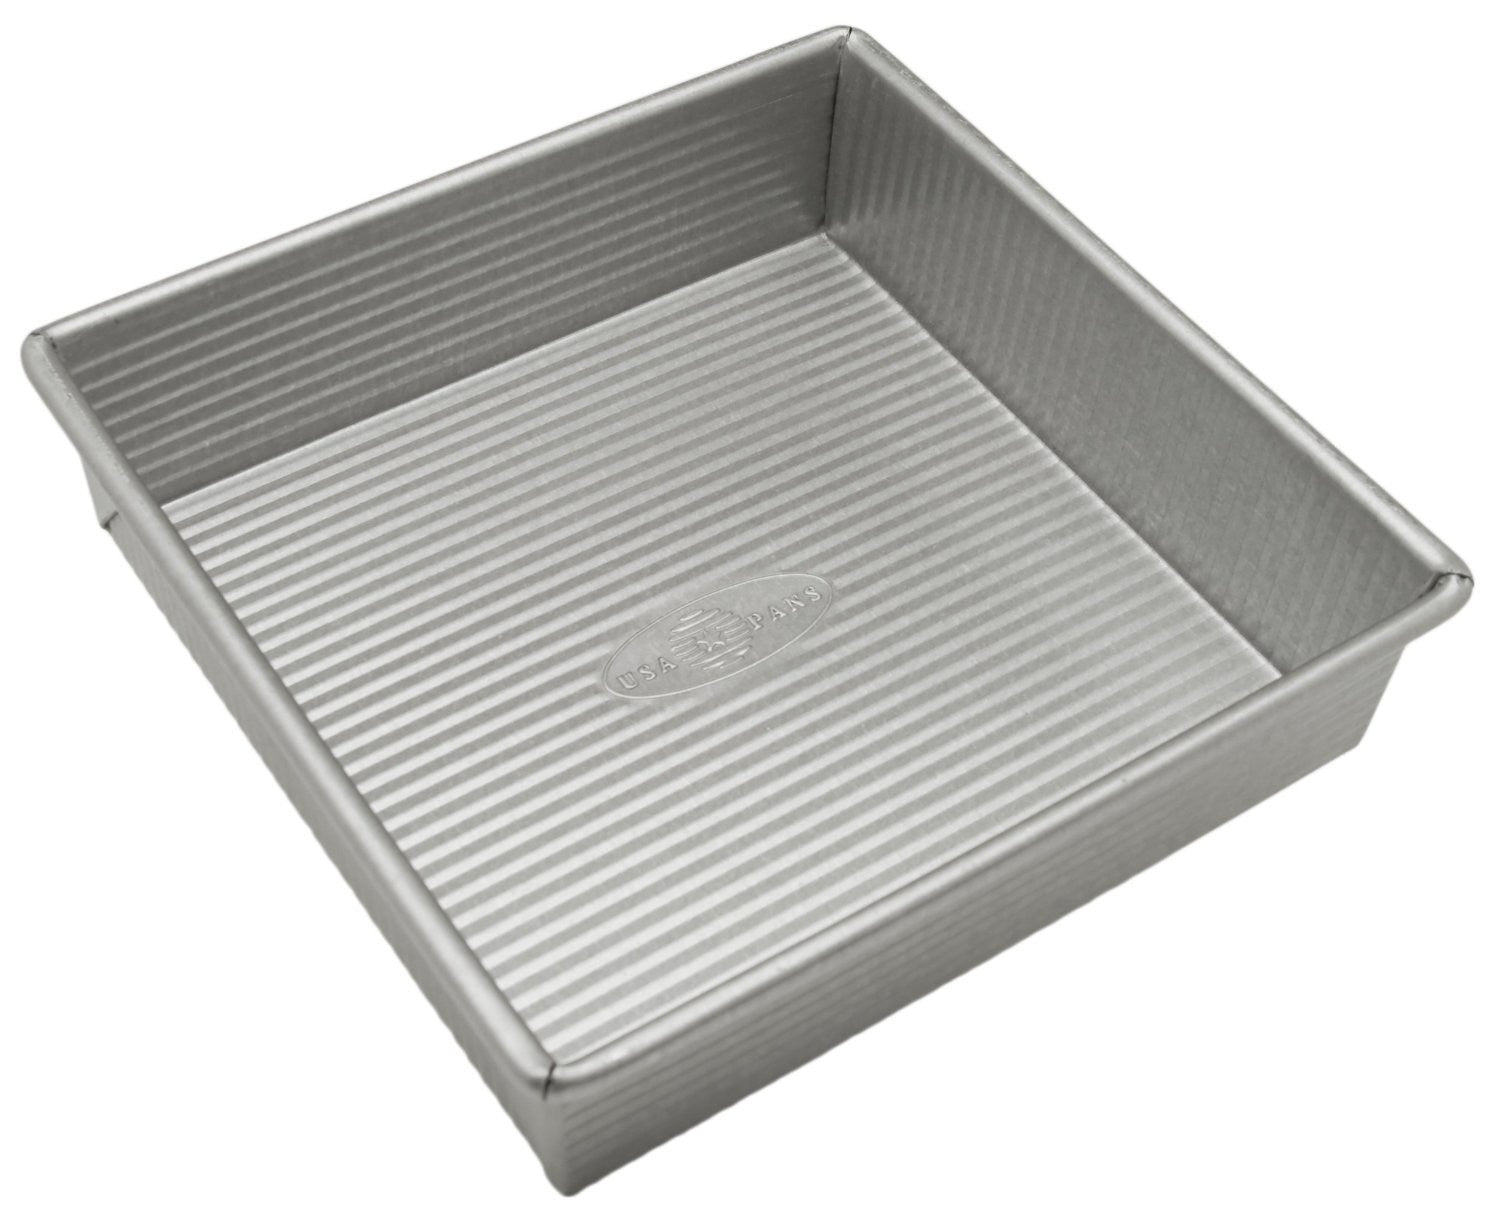 9-Inch Aluminized Steel Square Cake Pan